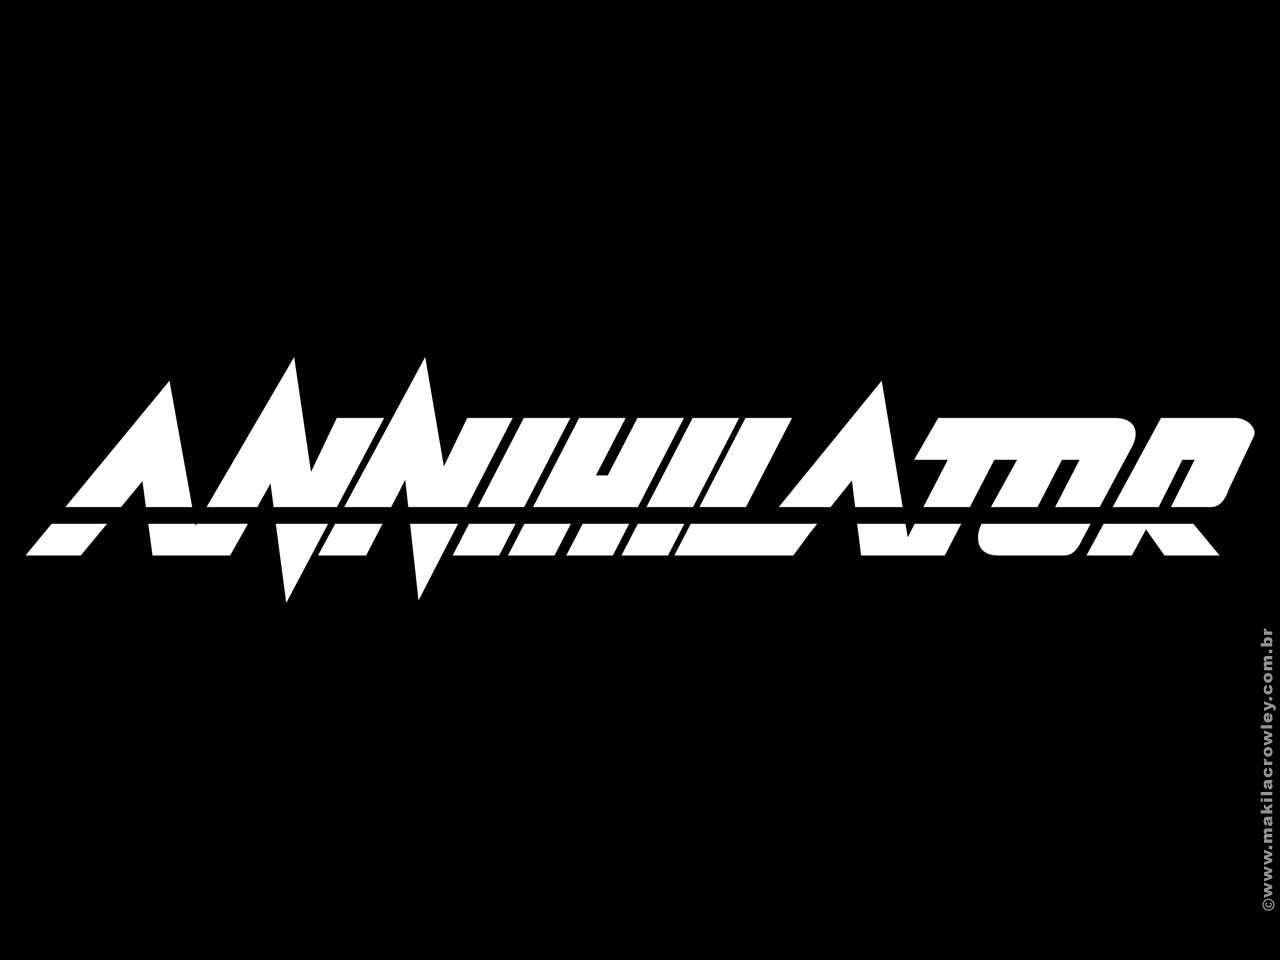 Annihilator #logo. Death Metal, Black Metal, Hard Rock & Heavy